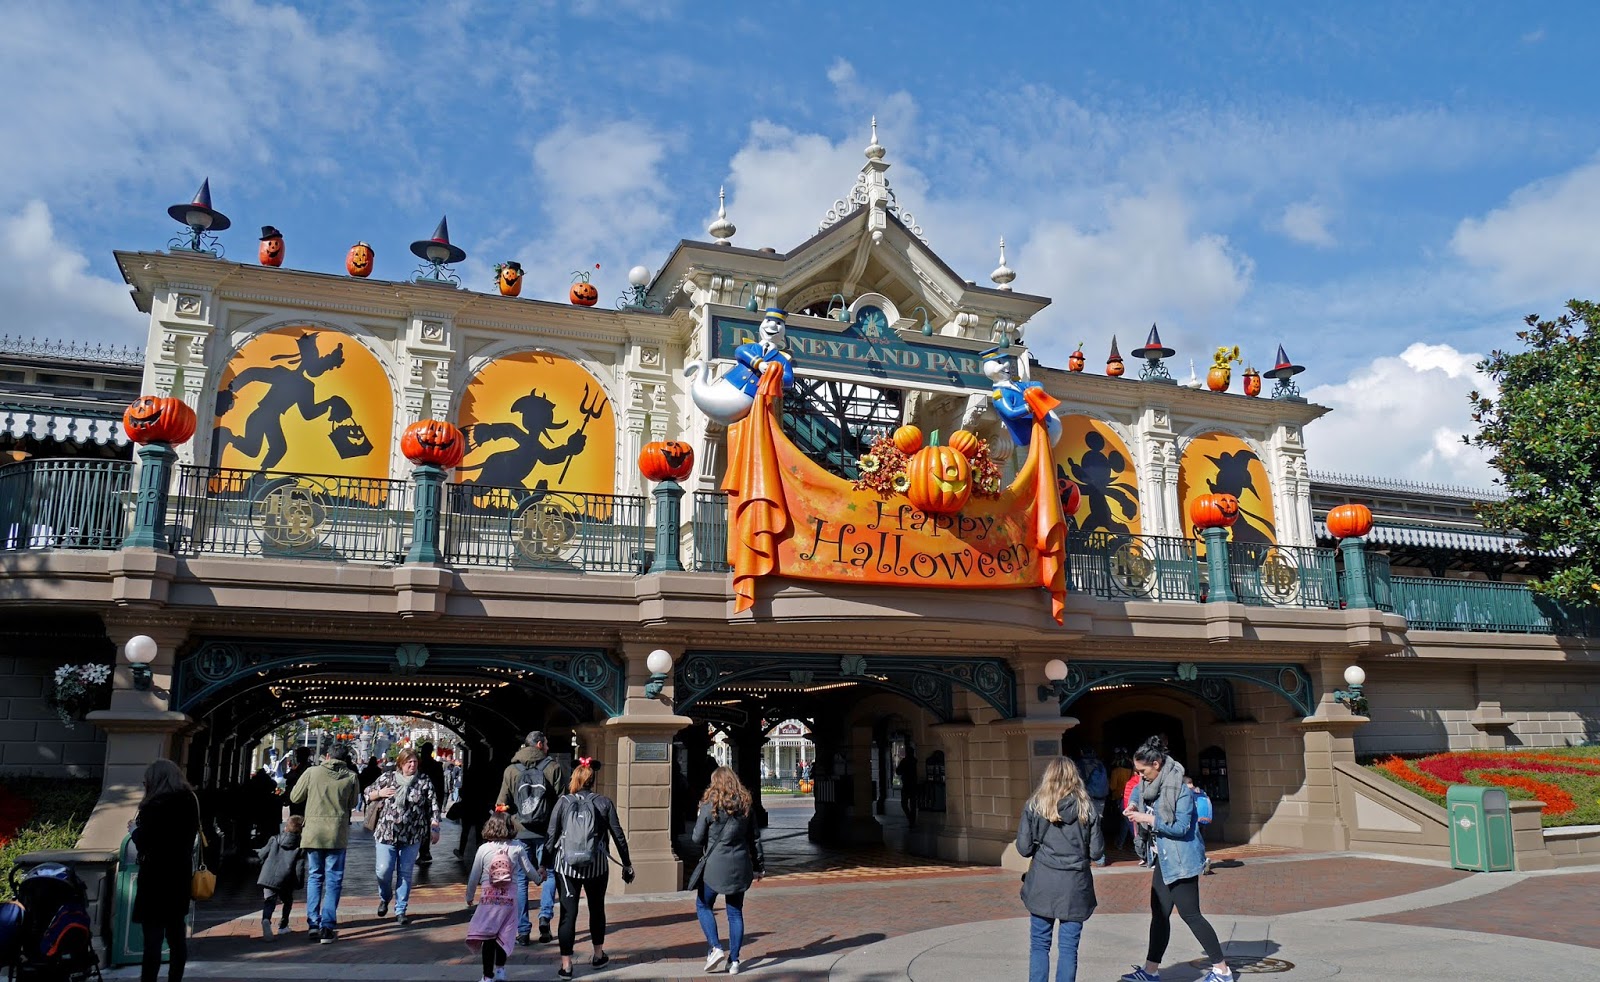 Halloween display above the Disneyland Park entrance, Disneyland Paris